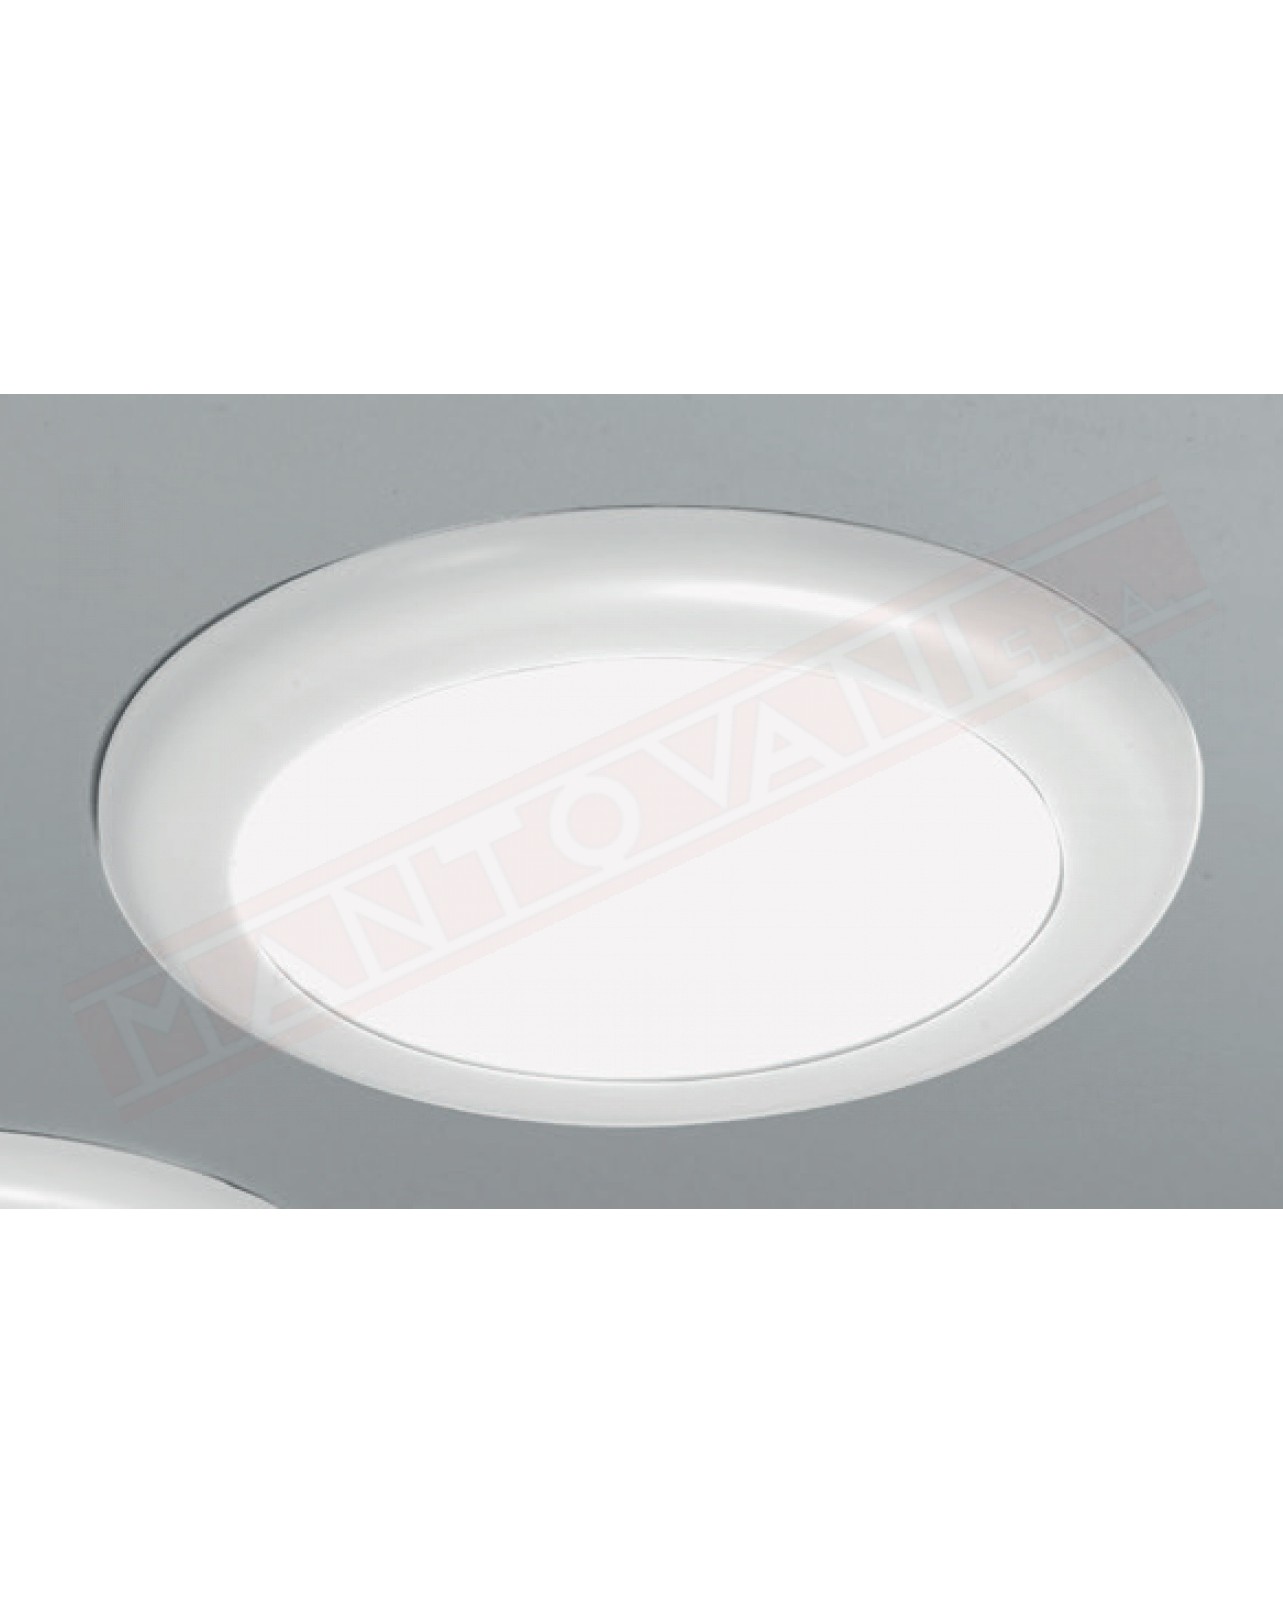 Novalux plafoniera\incasso led Crep Tondo 10-13-16W fino a 1826 lumen IP 20 classe enrgetica A diametro 235 h16+25 mm